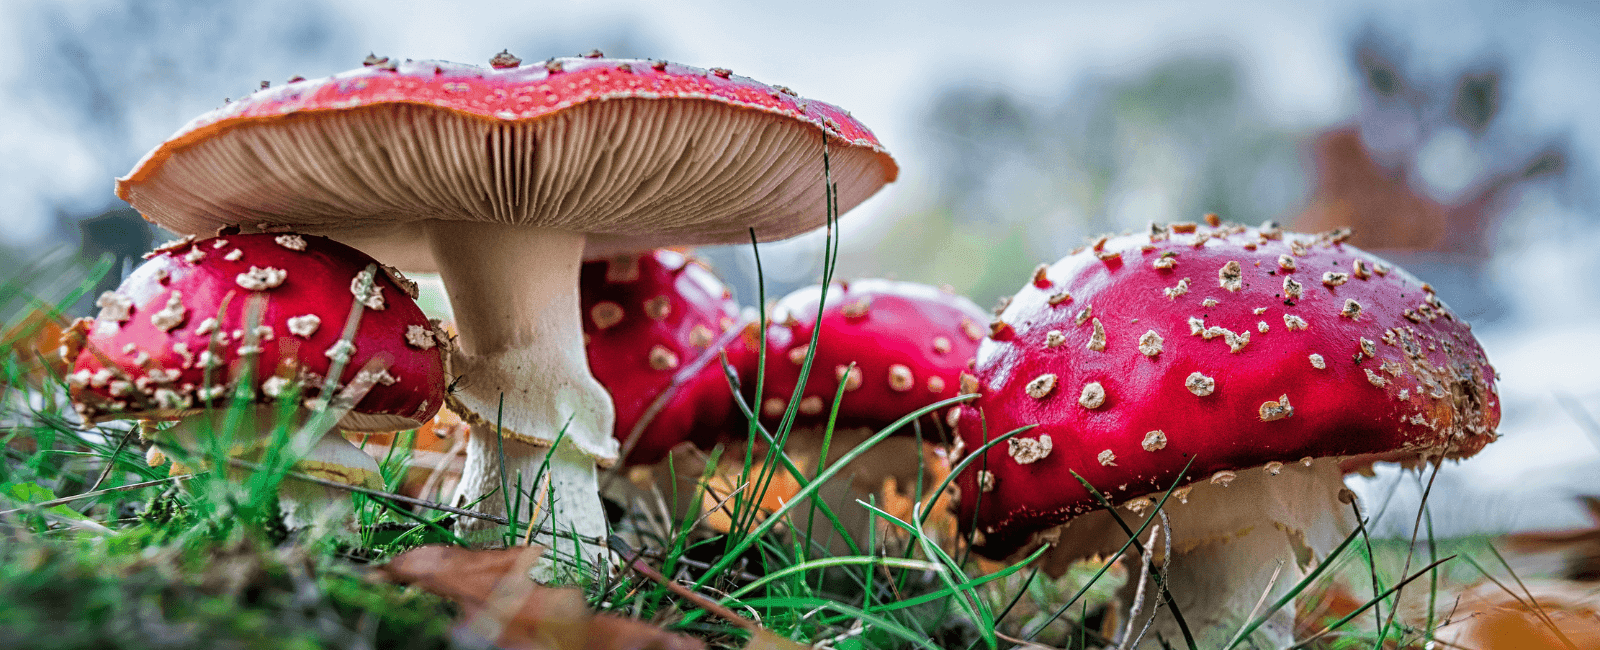 Toadstools vs. Mushrooms: Different Species or Just Wordplay? 